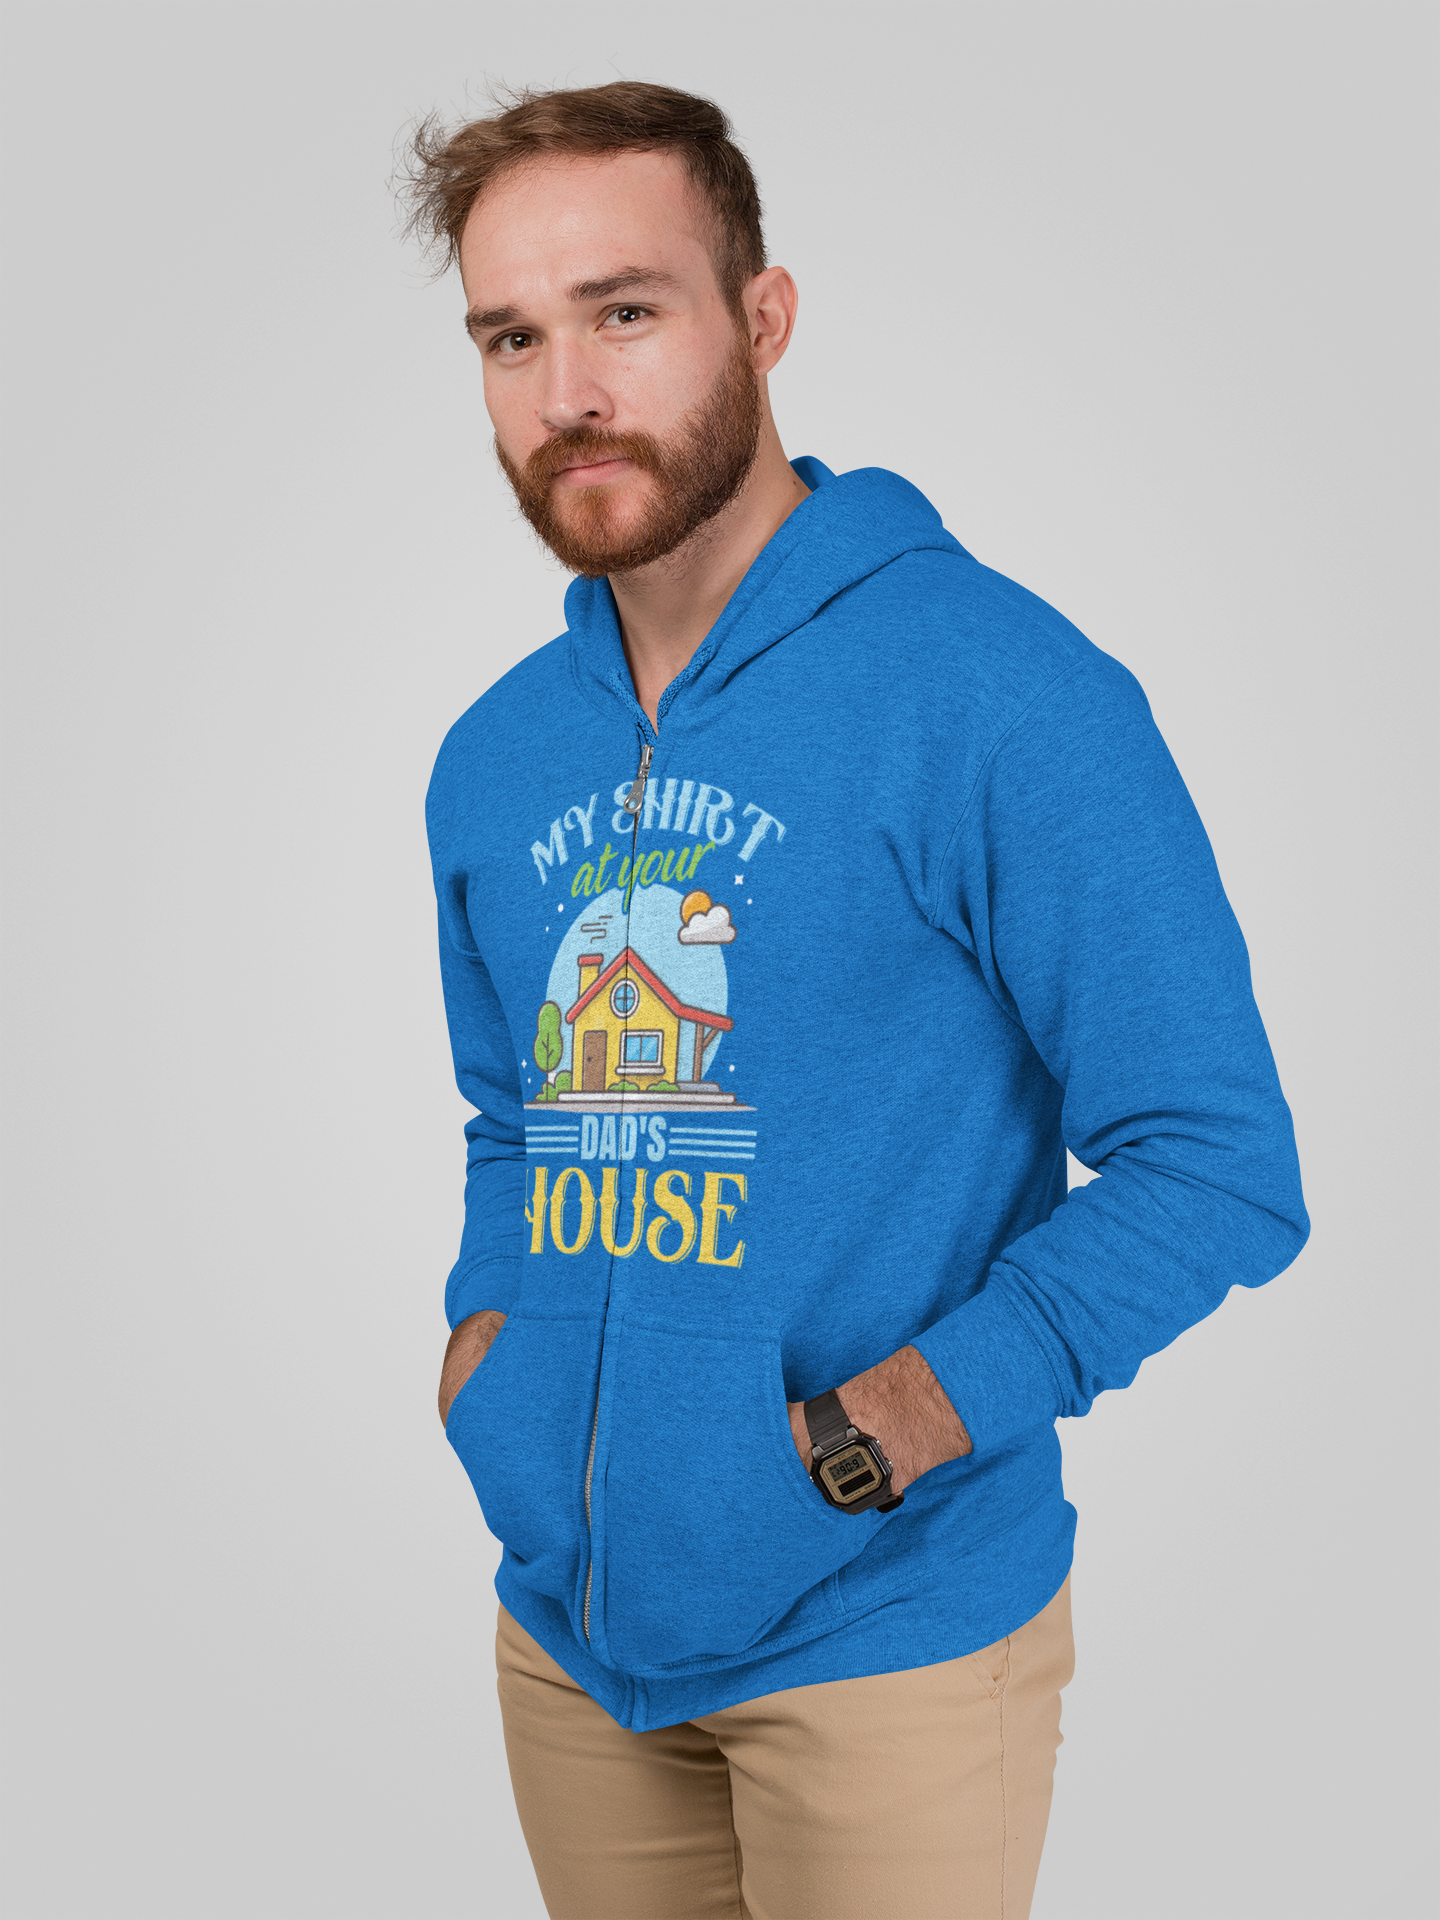 My shirt at your dad's house; Full-zip hoodie sweatshirt